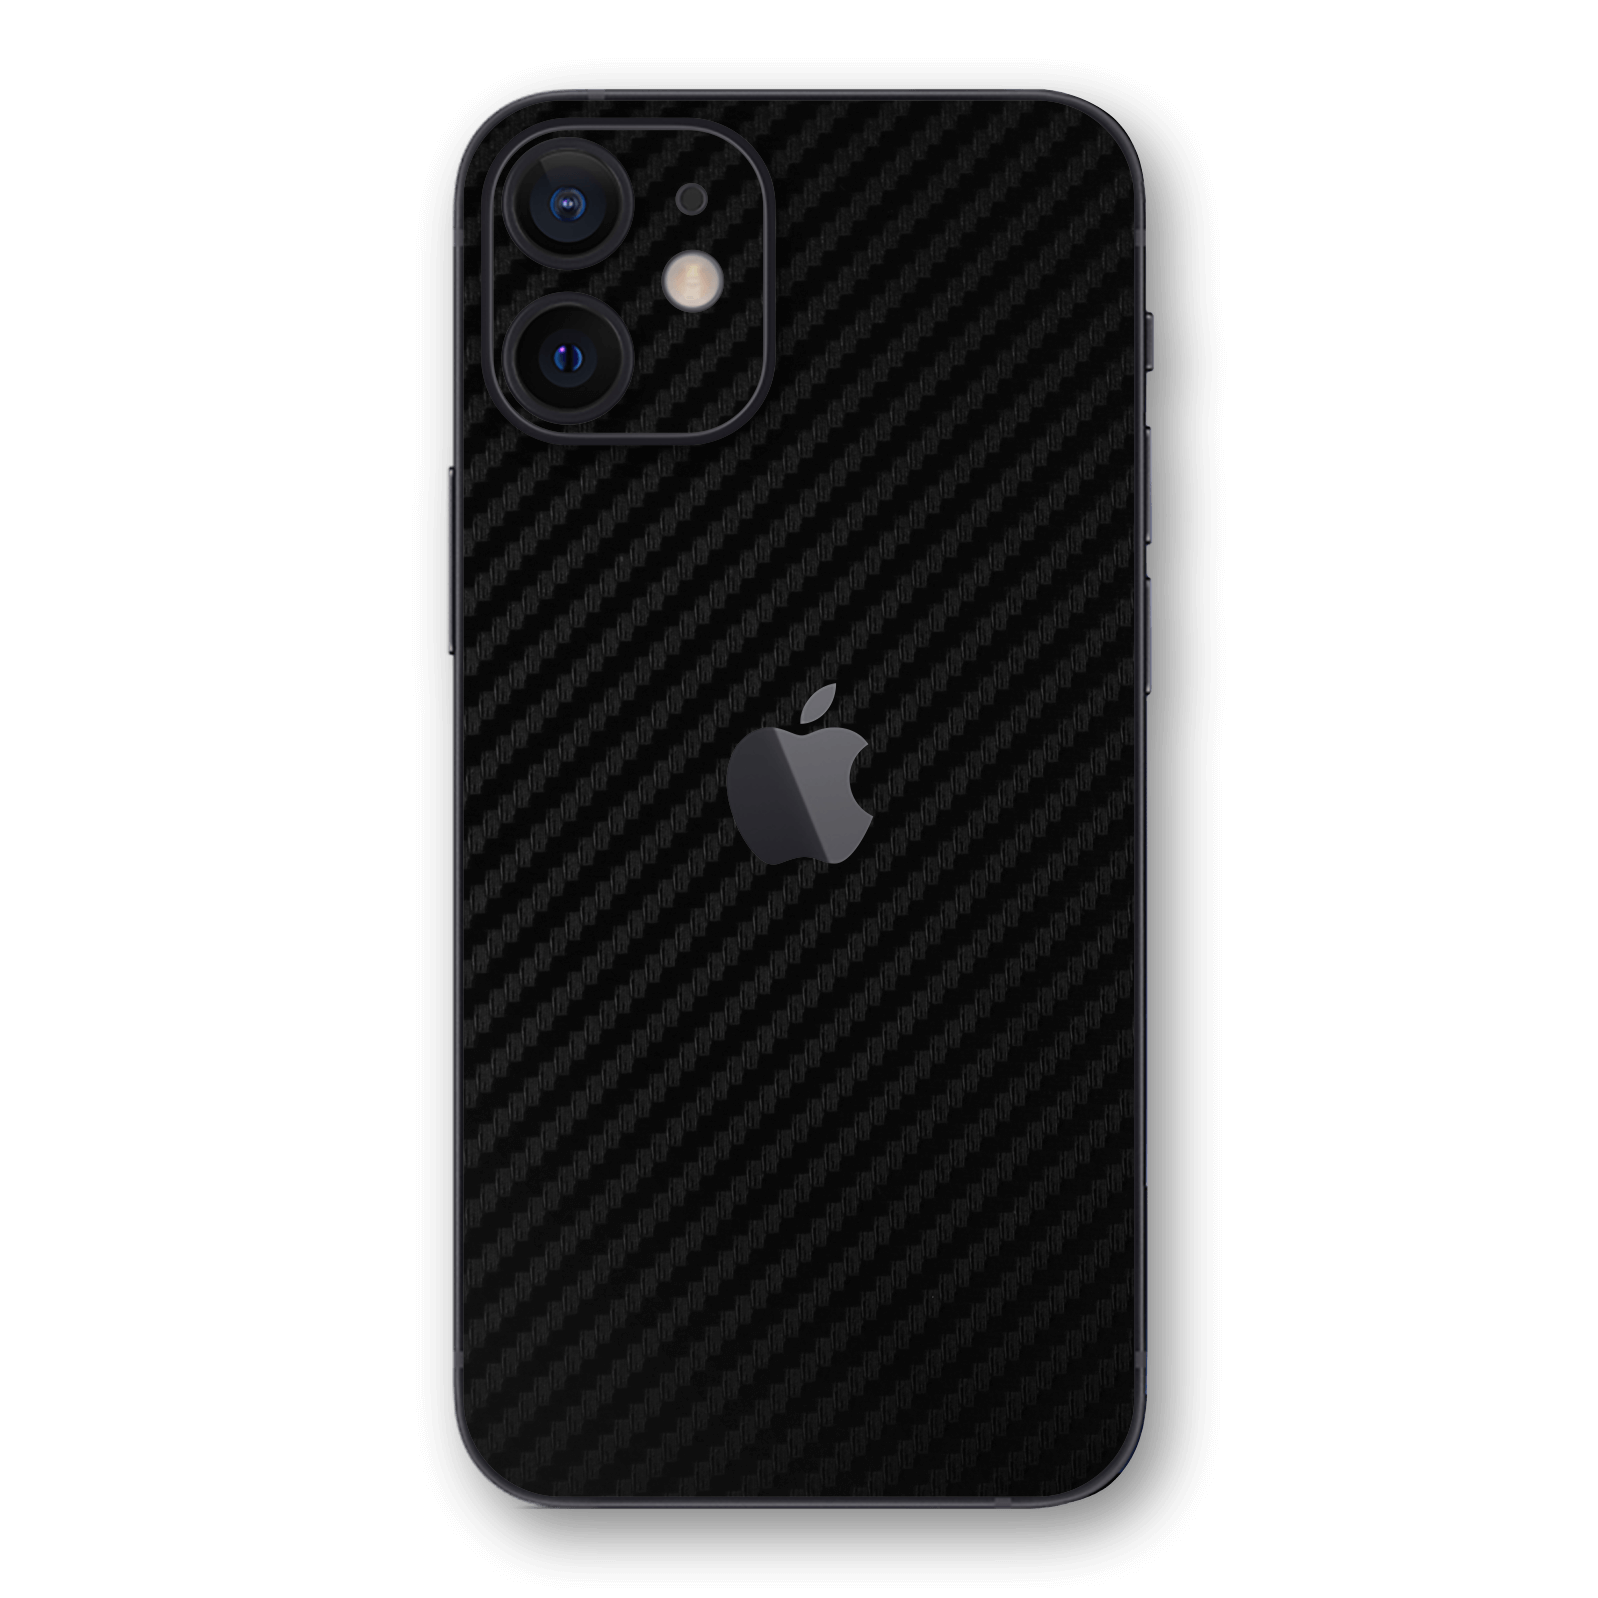 iPhone 12 3D Textured CARBON Fibre Skin - BLACK - Premium Protective Skin Wrap Sticker Decal Cover by QSKINZ | Qskinz.com